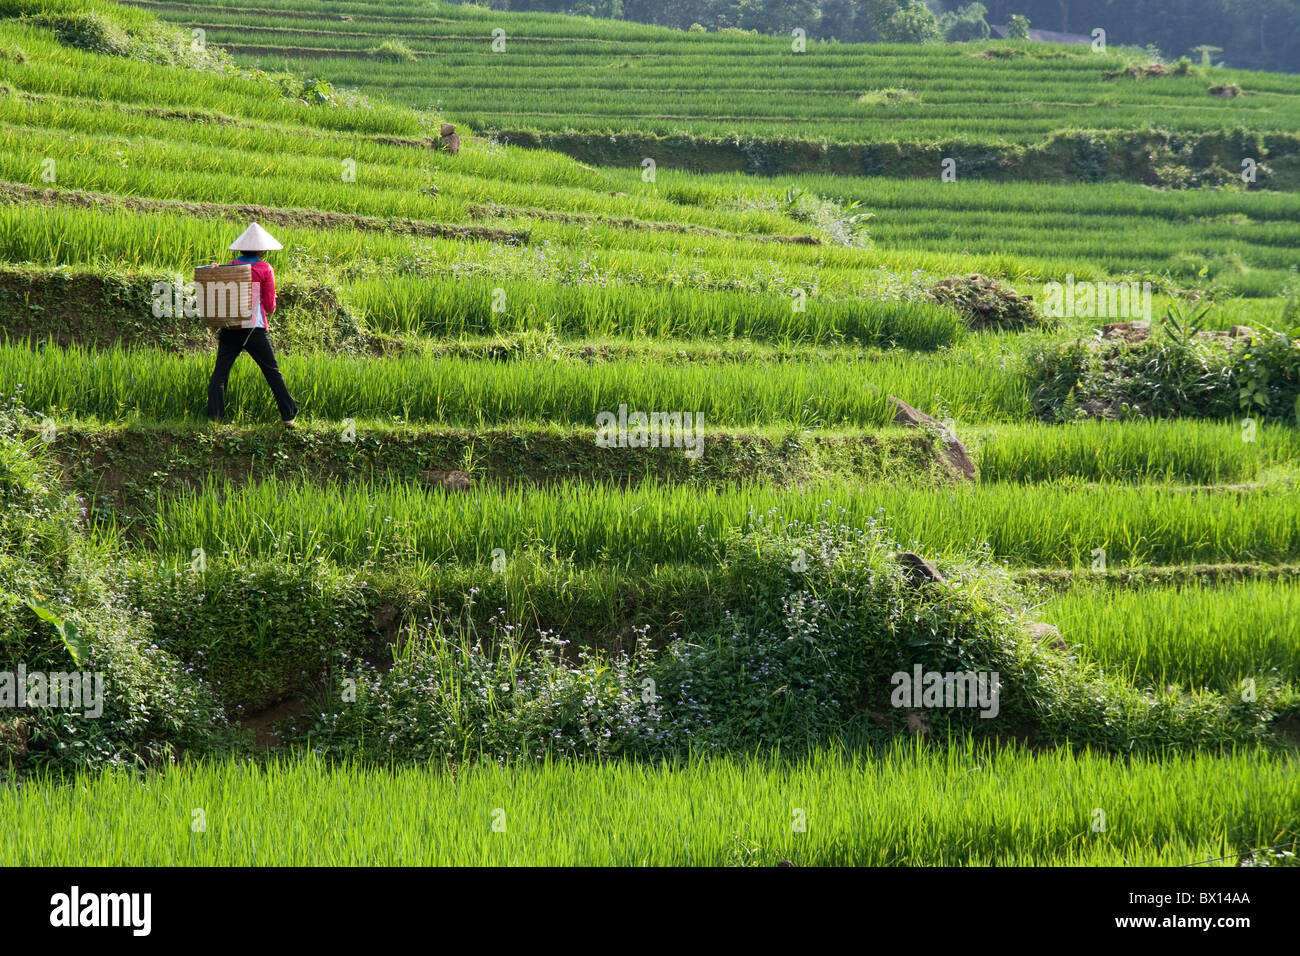 Vietnamese Rice Paddy Farmer working in Fields Stock Photo